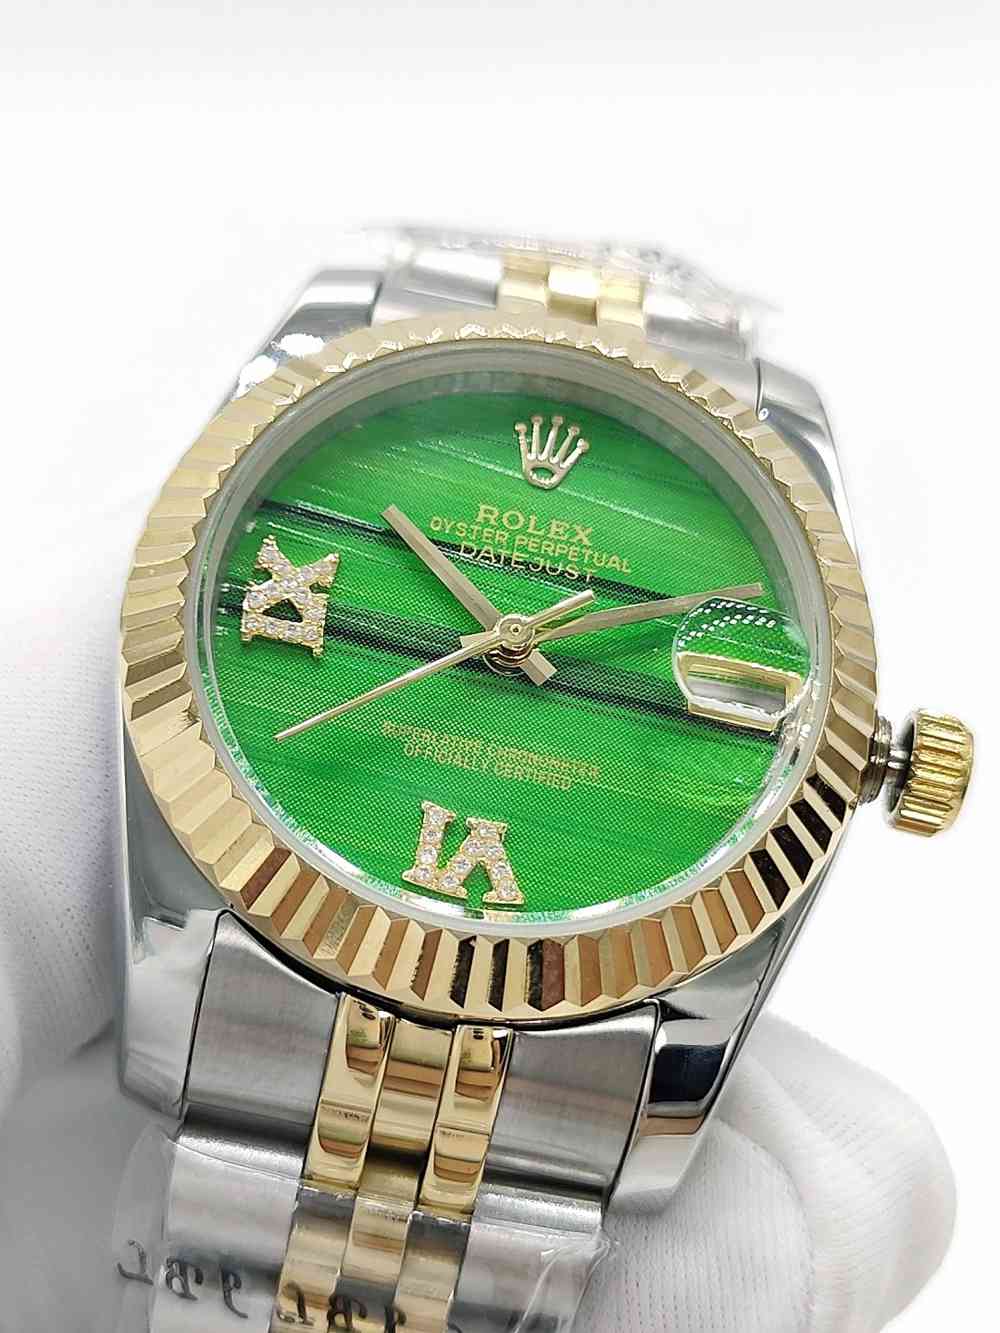 Datejust 2tone gold 31mm women automatic 2813 movement jubilee bracelet green dial roman 6-9 S028